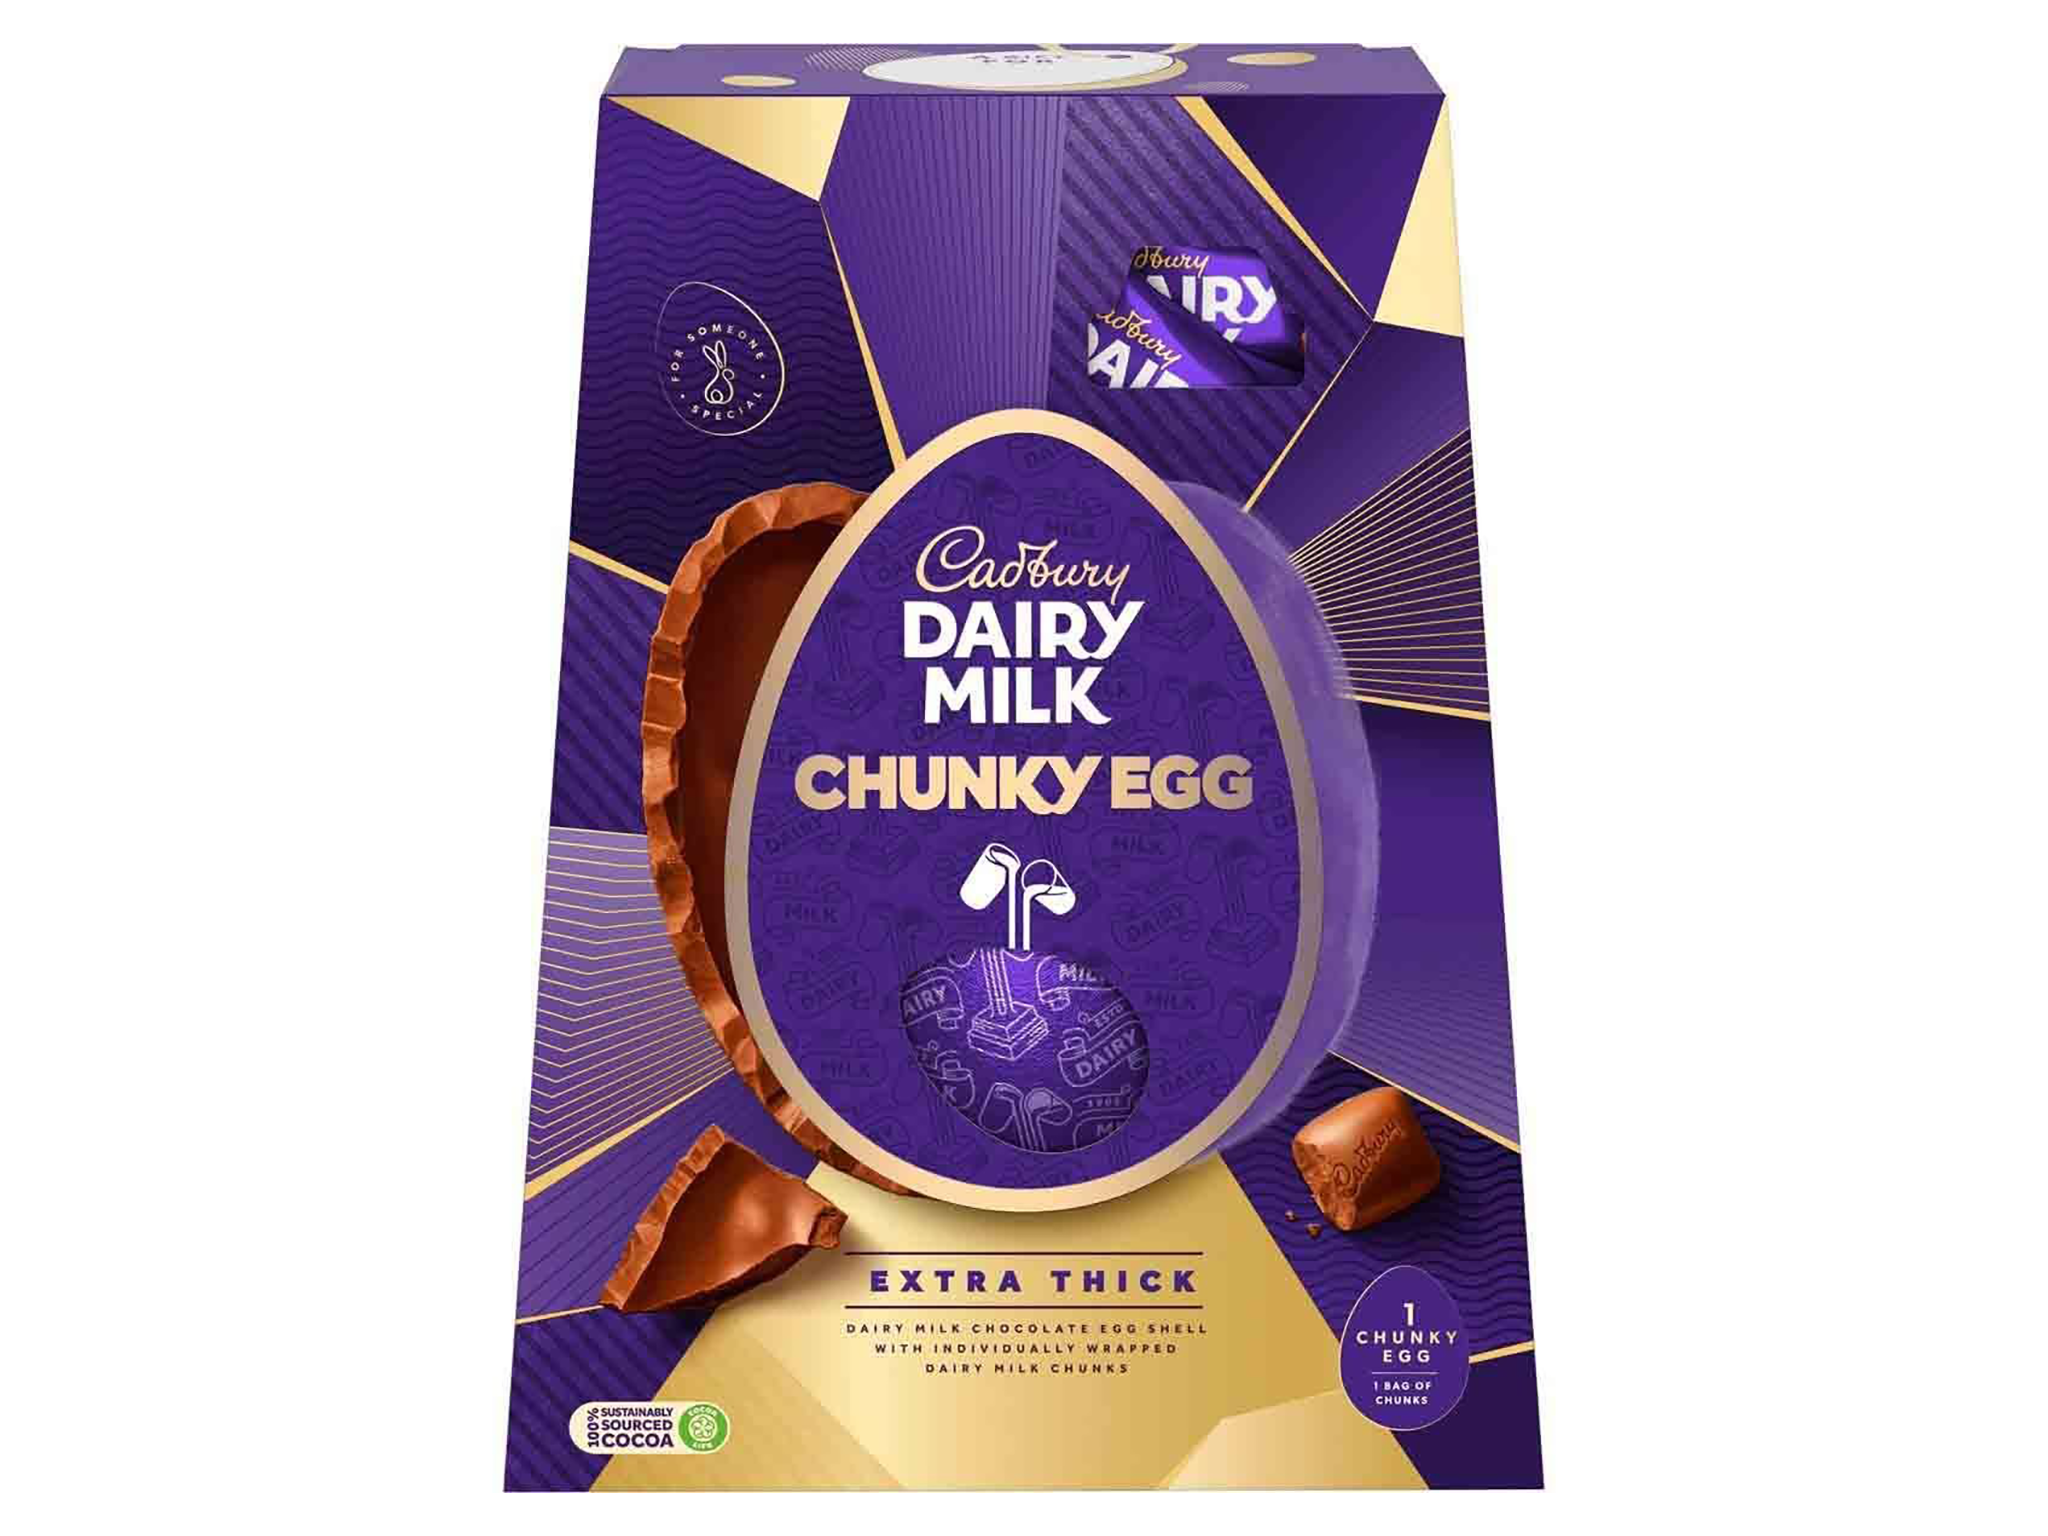 Cadbury dairy milk chunky egg.png